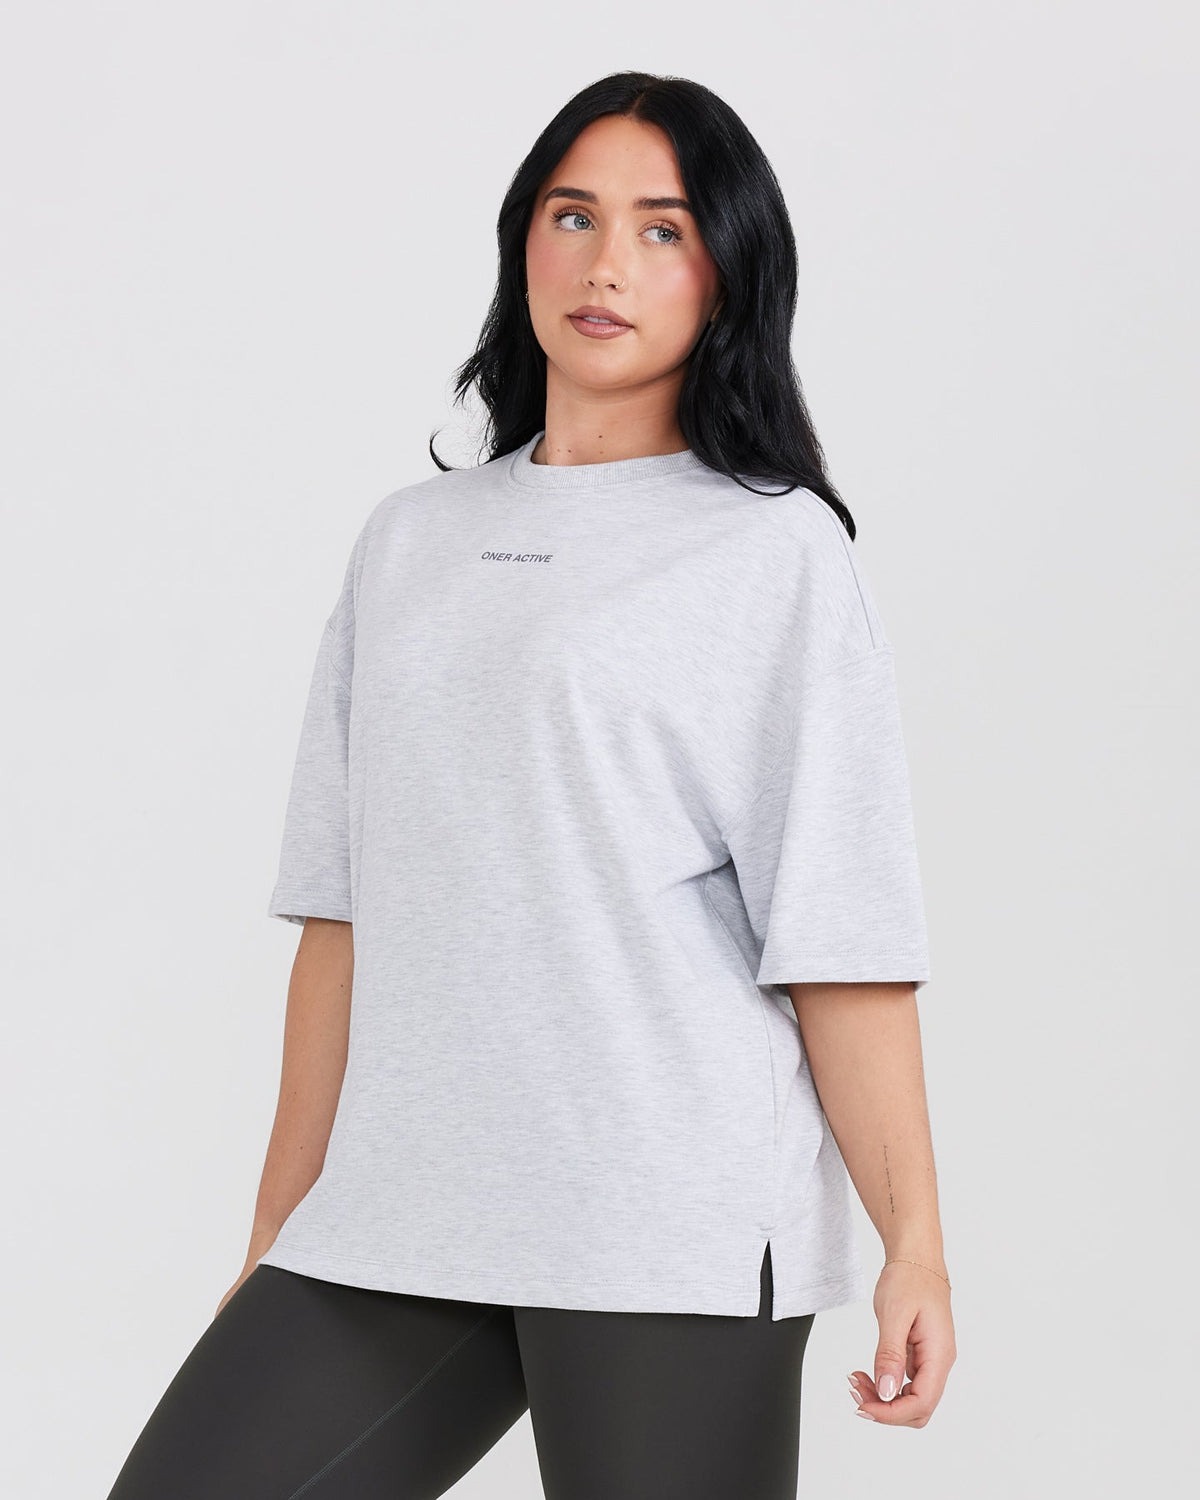 Short Sleeve Shirts Ladies Light Grey Marl | Oner Active